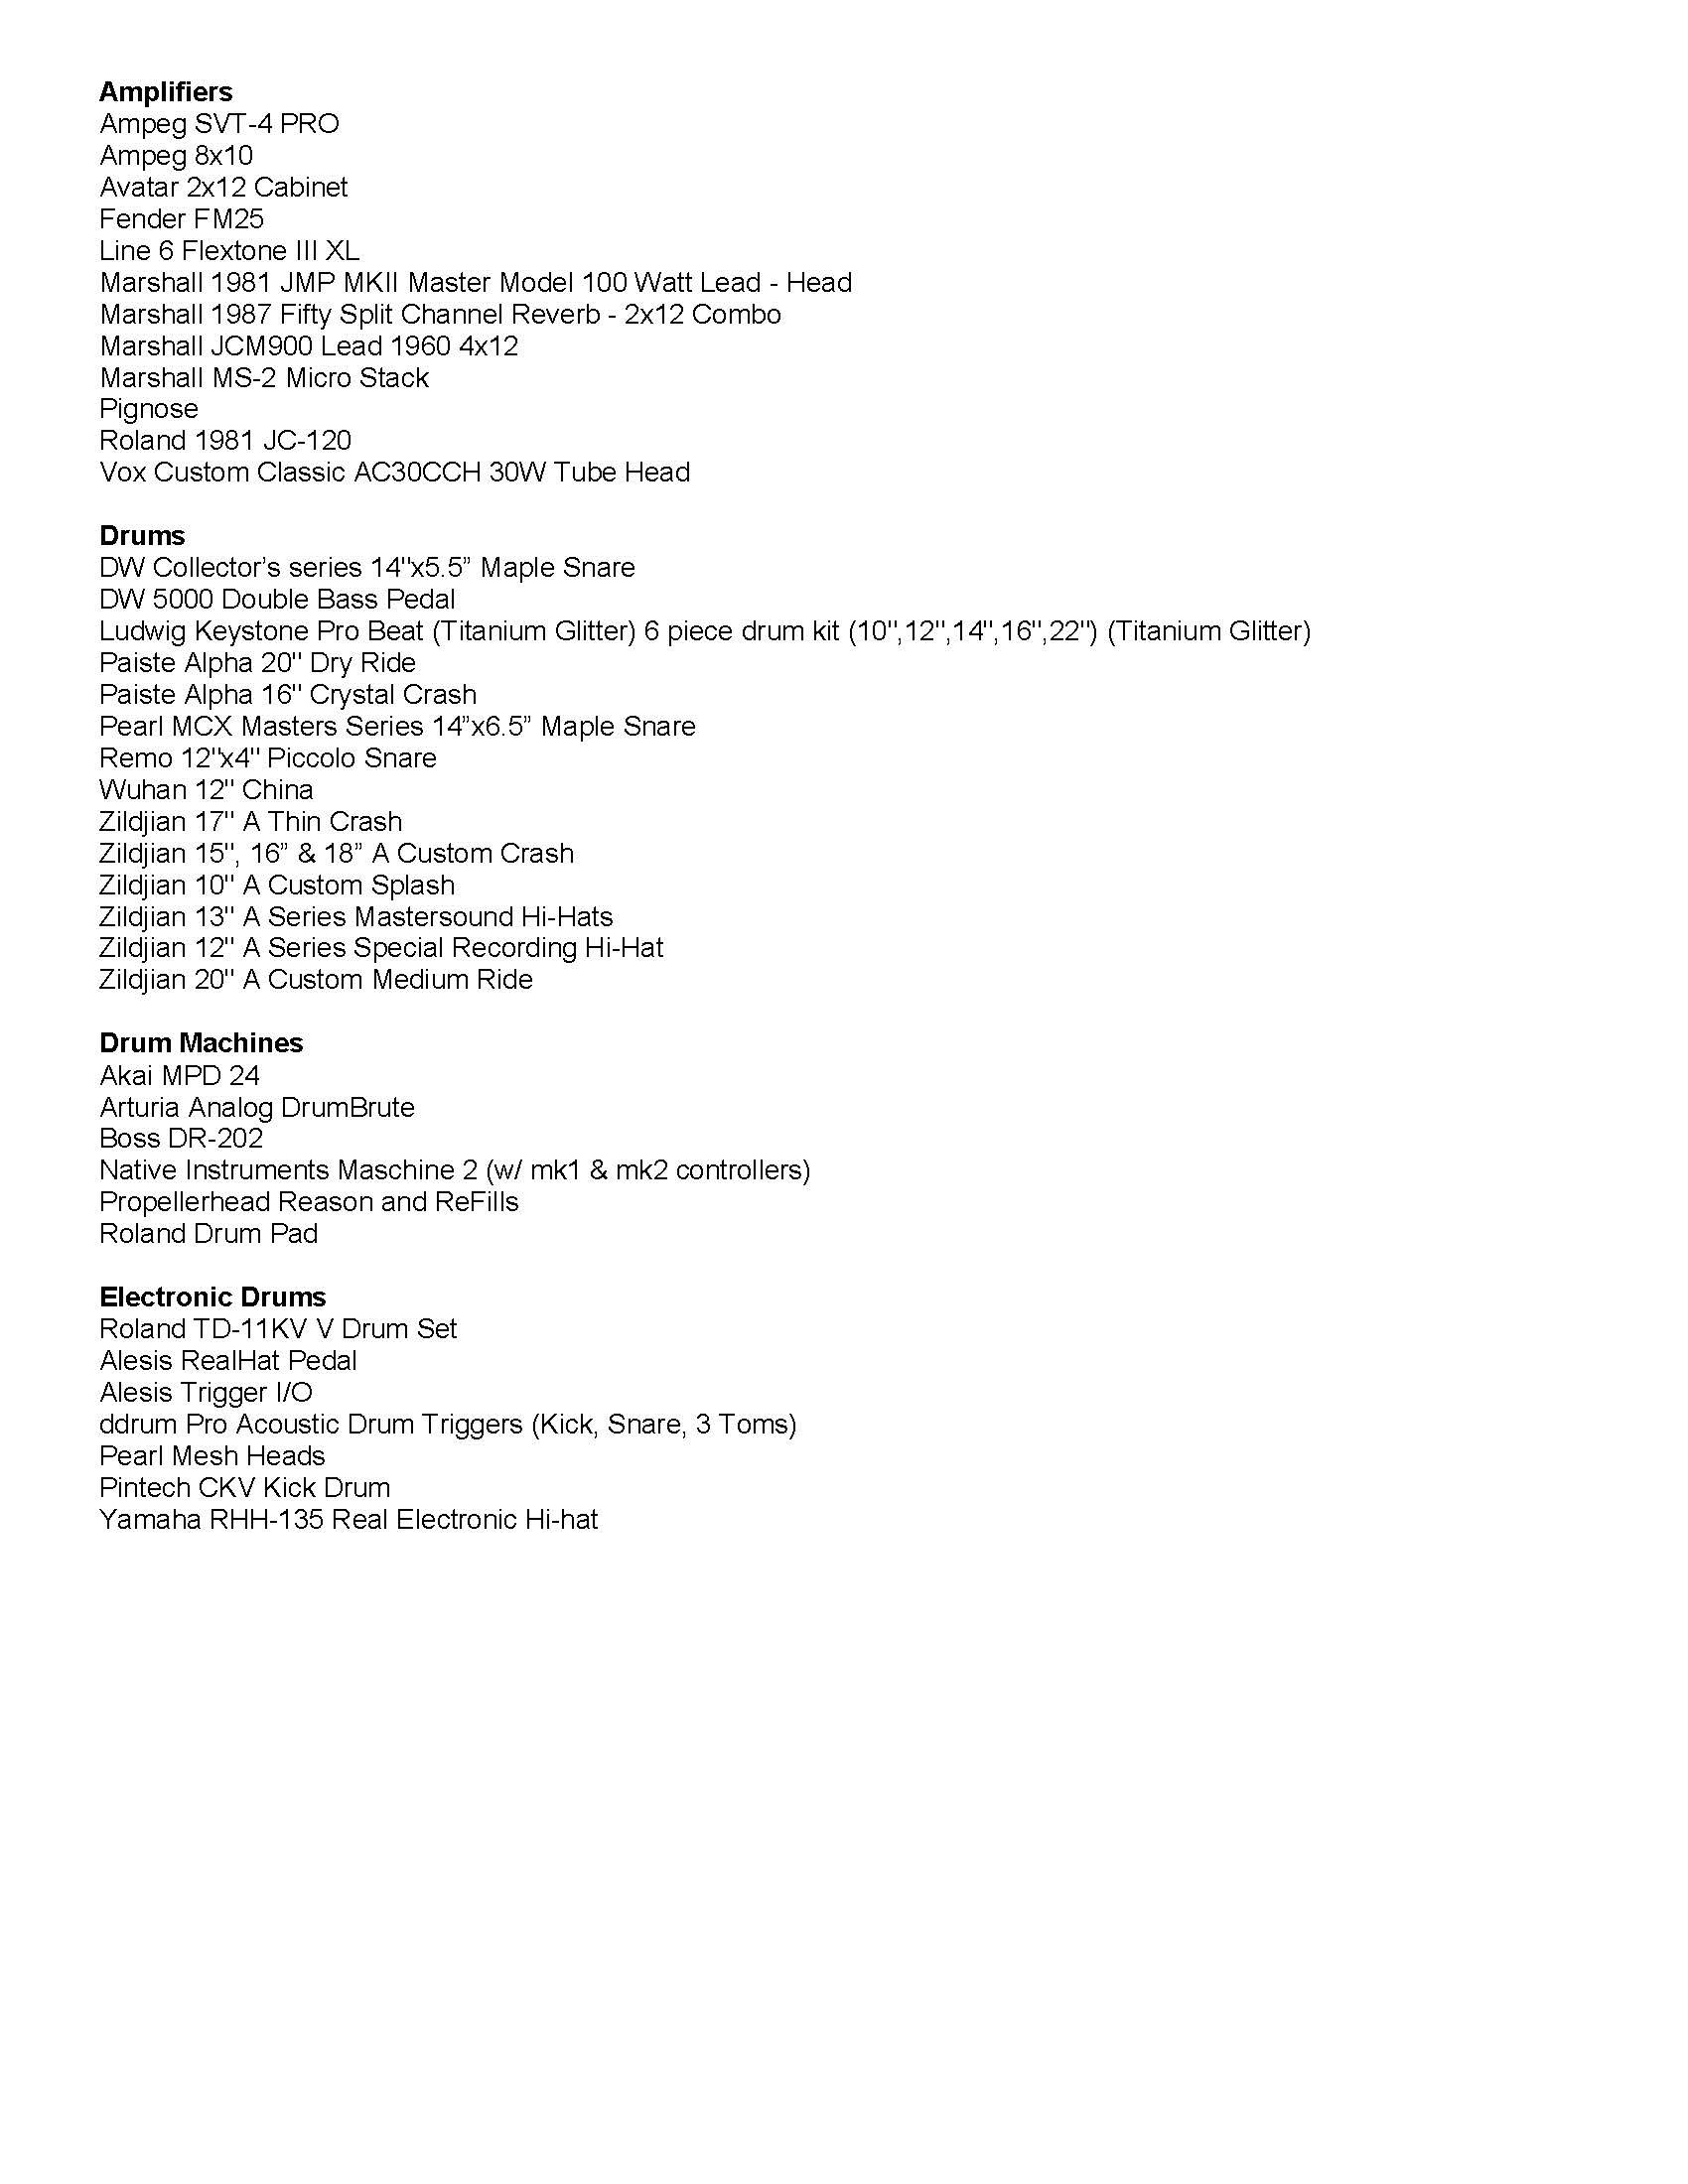 Clincal Sound Equipment List 12.21.22_Page_3.jpg